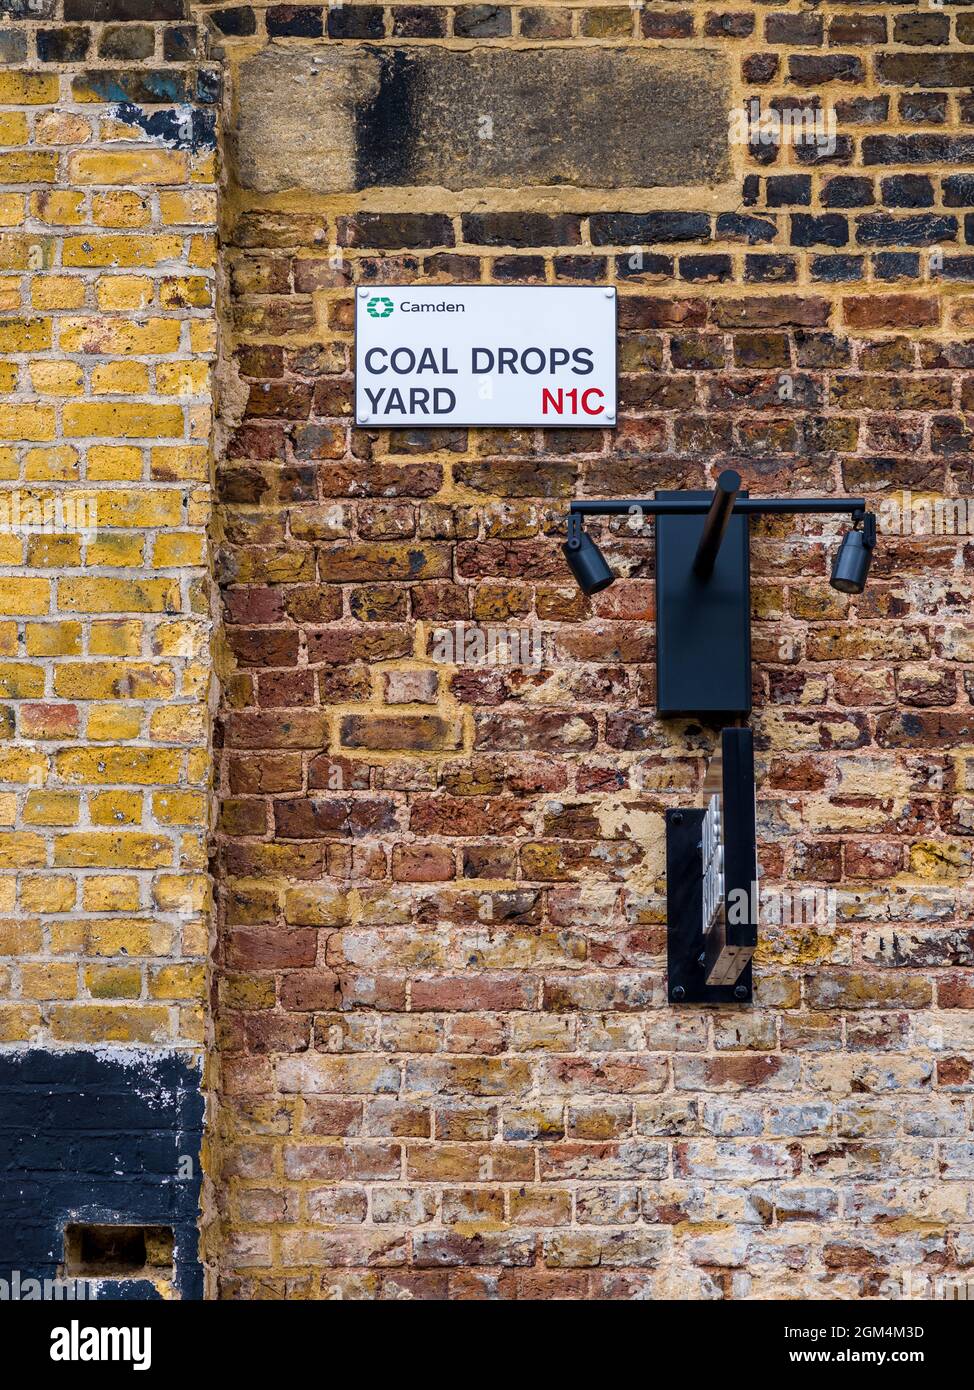 Coal Drops Yard Street Sign - Coal Drops Yard London N1C, parte del progetto di riqualificazione di Kings Cross - London Street signs. Foto Stock